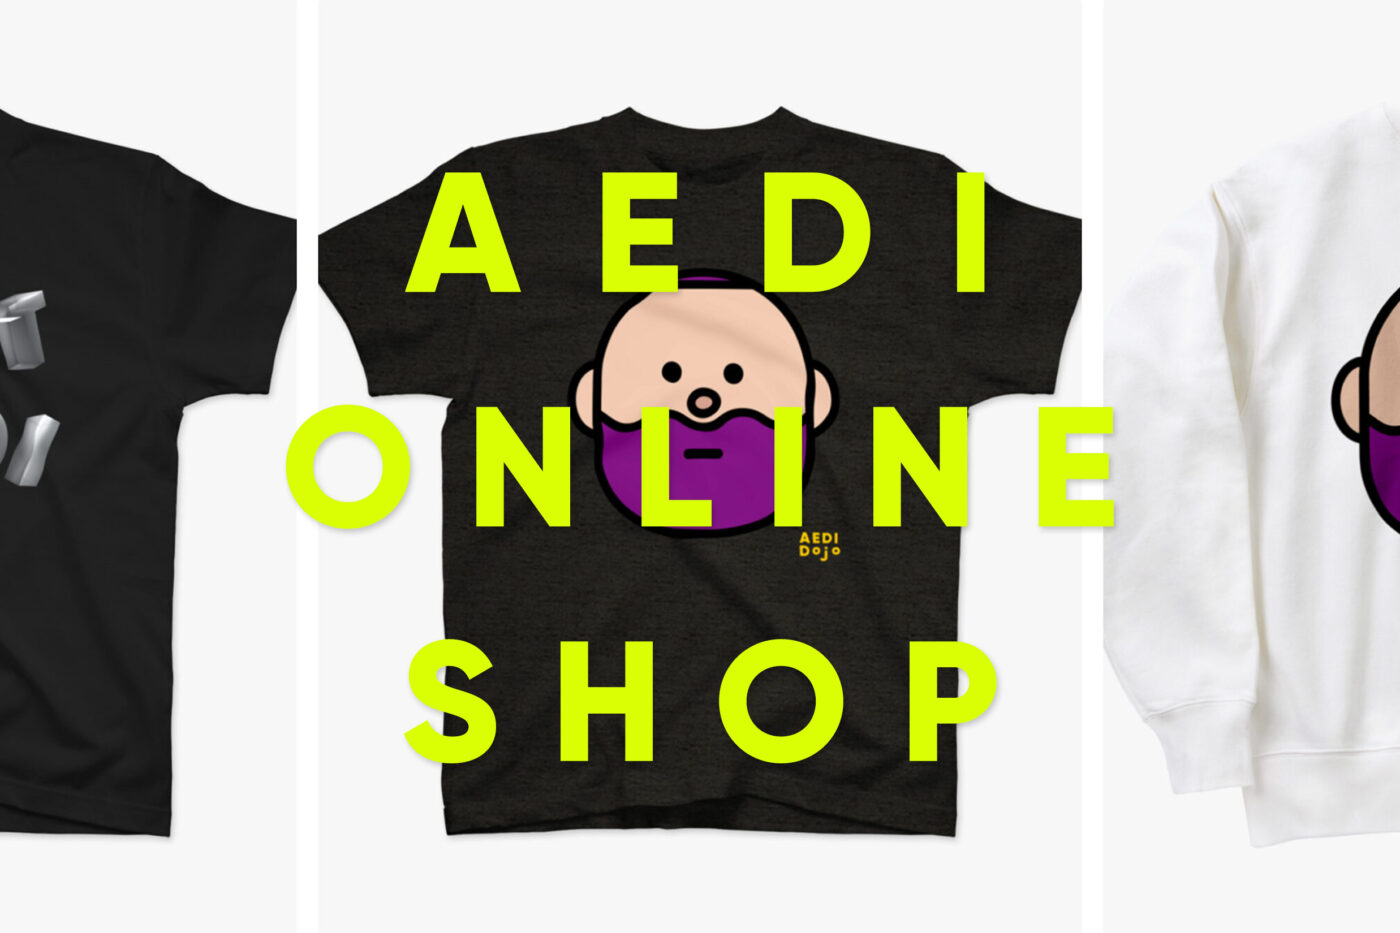 Launch of AEDI Online Shop